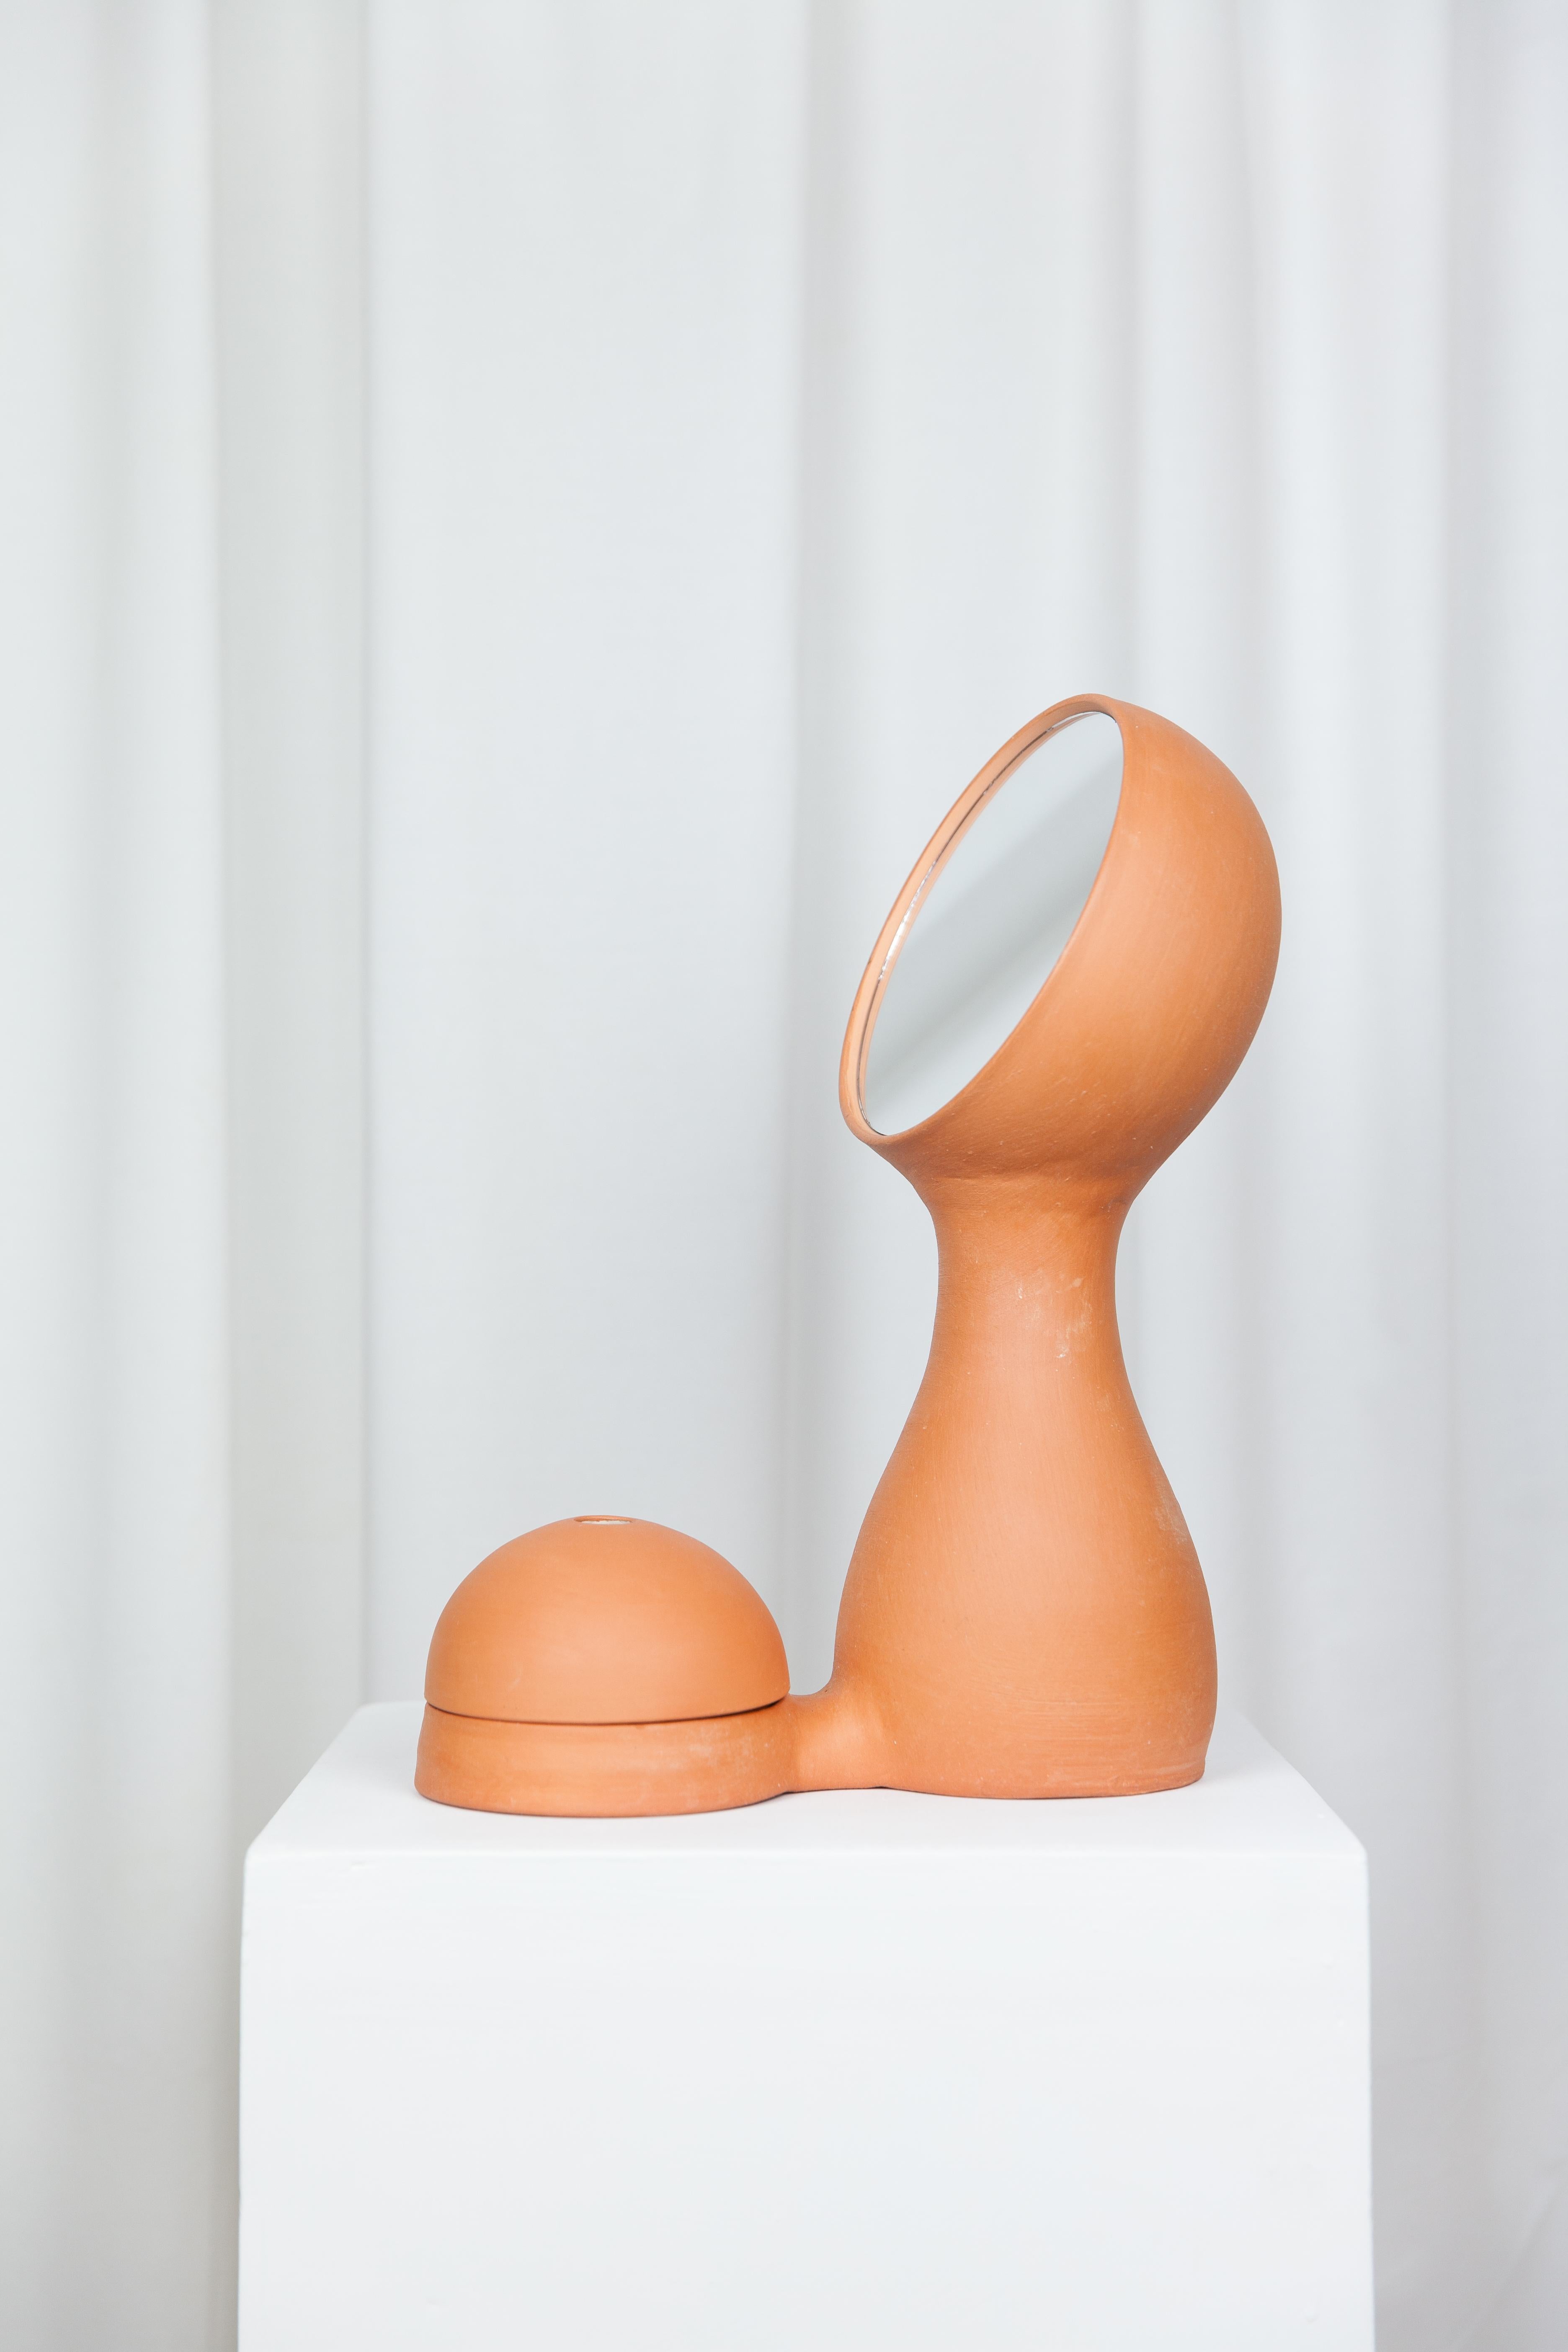 French Wit Mirror + Vase Beige by Lola Mayeras